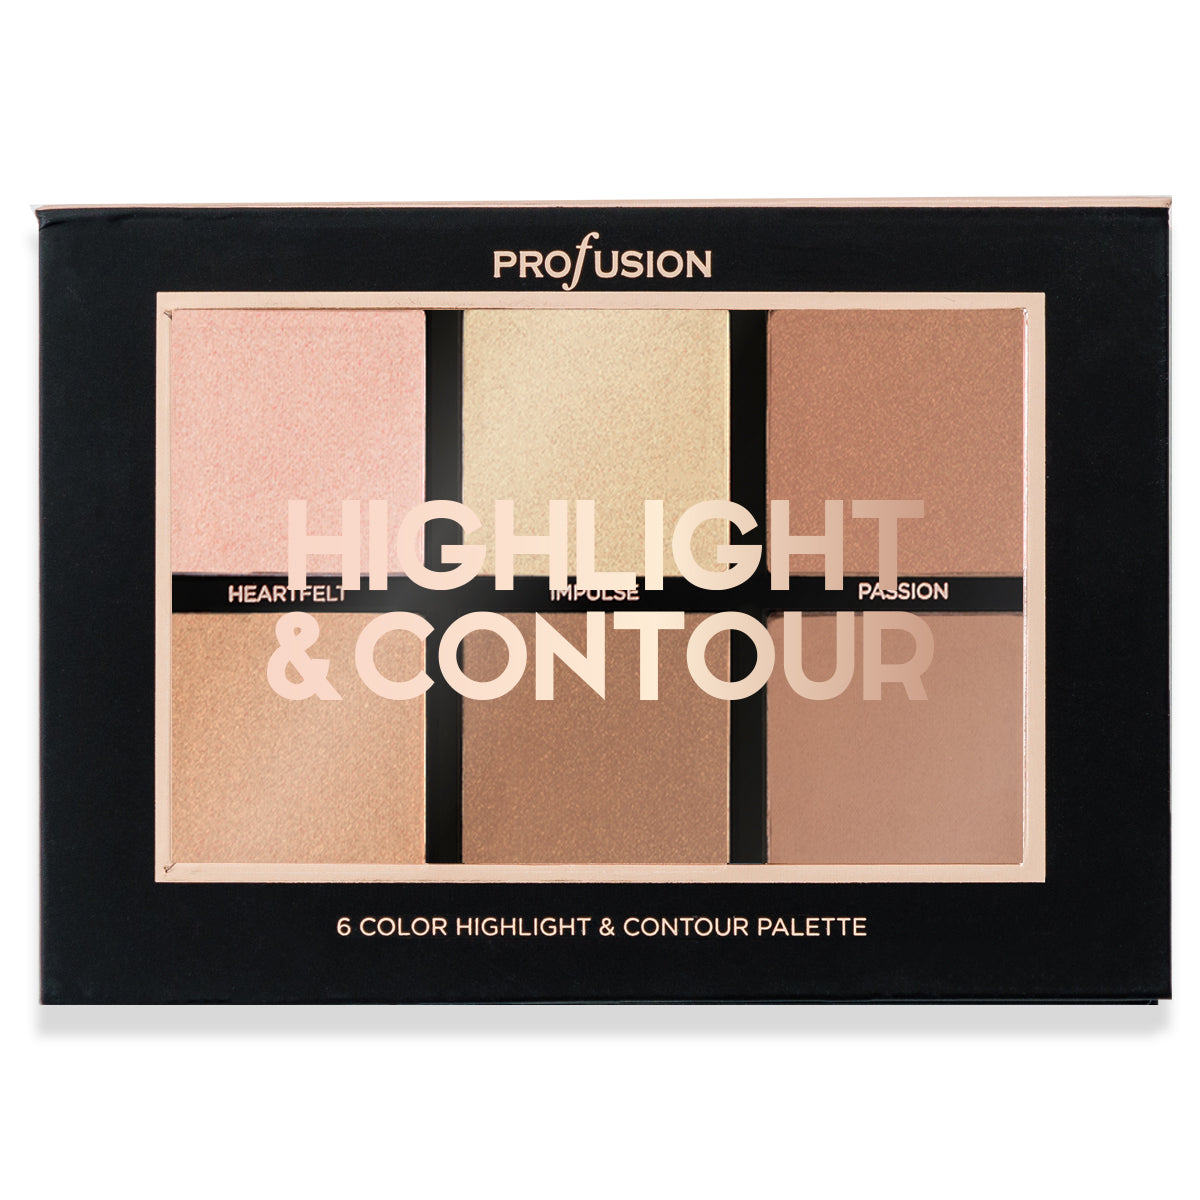 Profusion Highlight & Contour - Buy Makeup Online! - Profusion Cosmetics